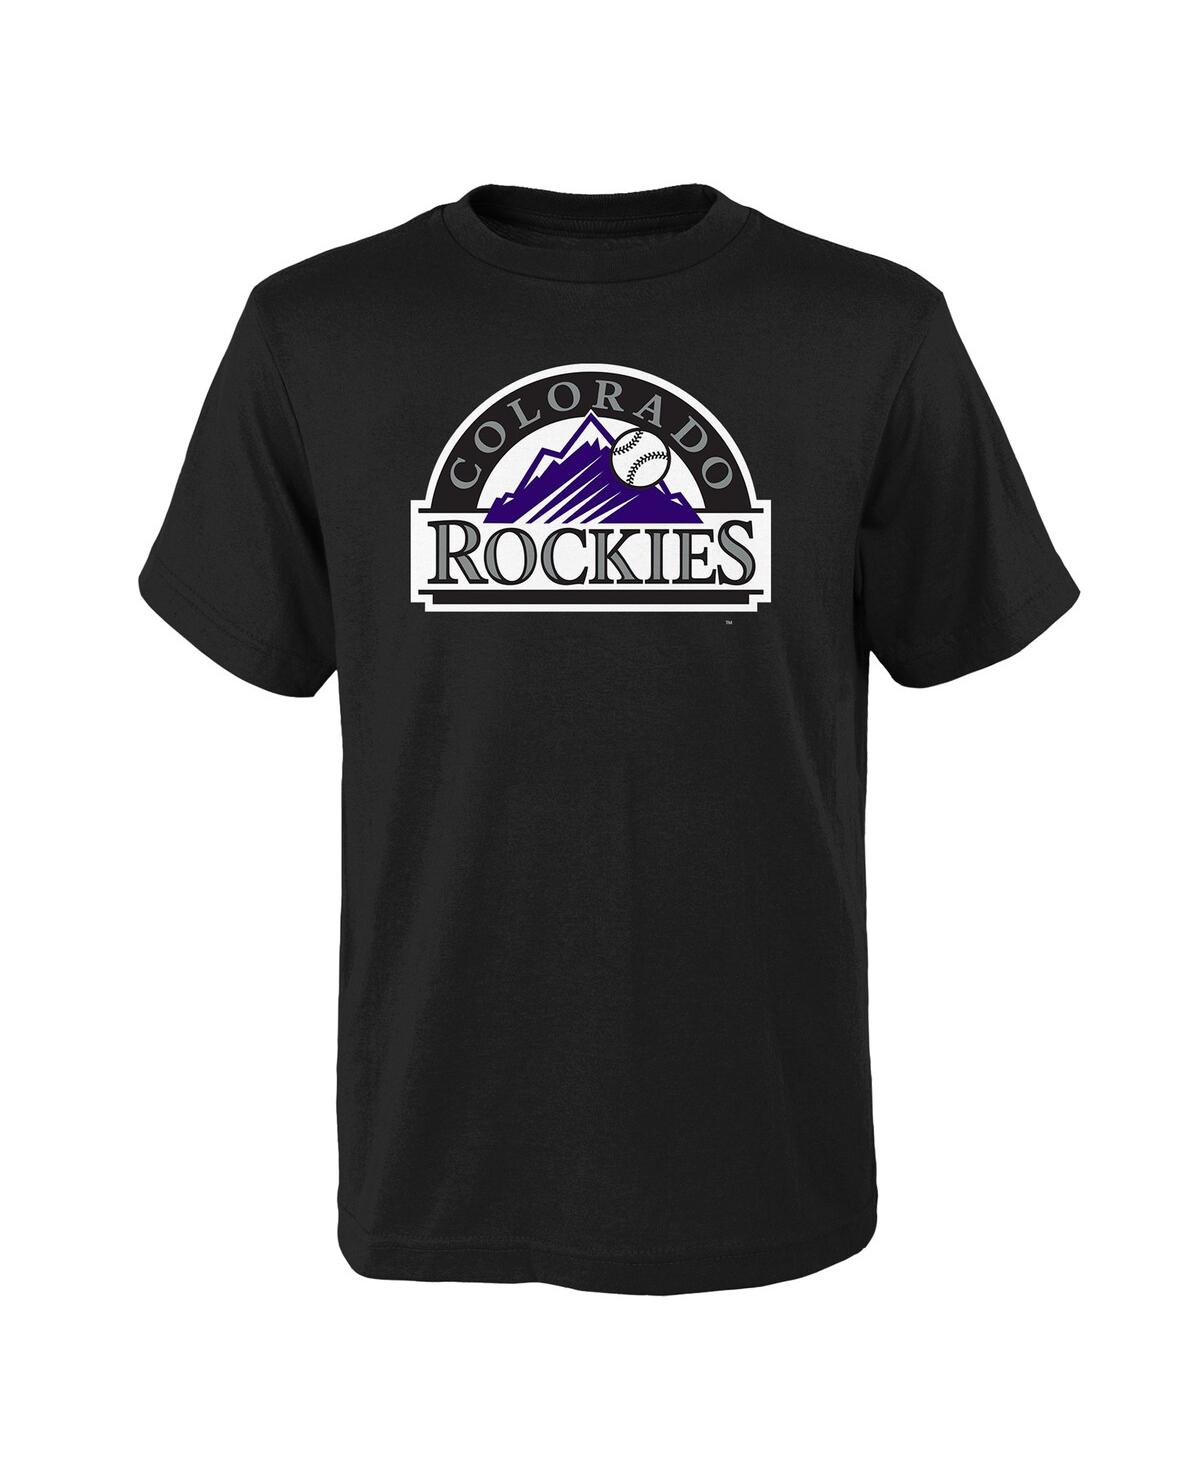 Colorado Rockies Apparel Shirts, hat and cooler bag